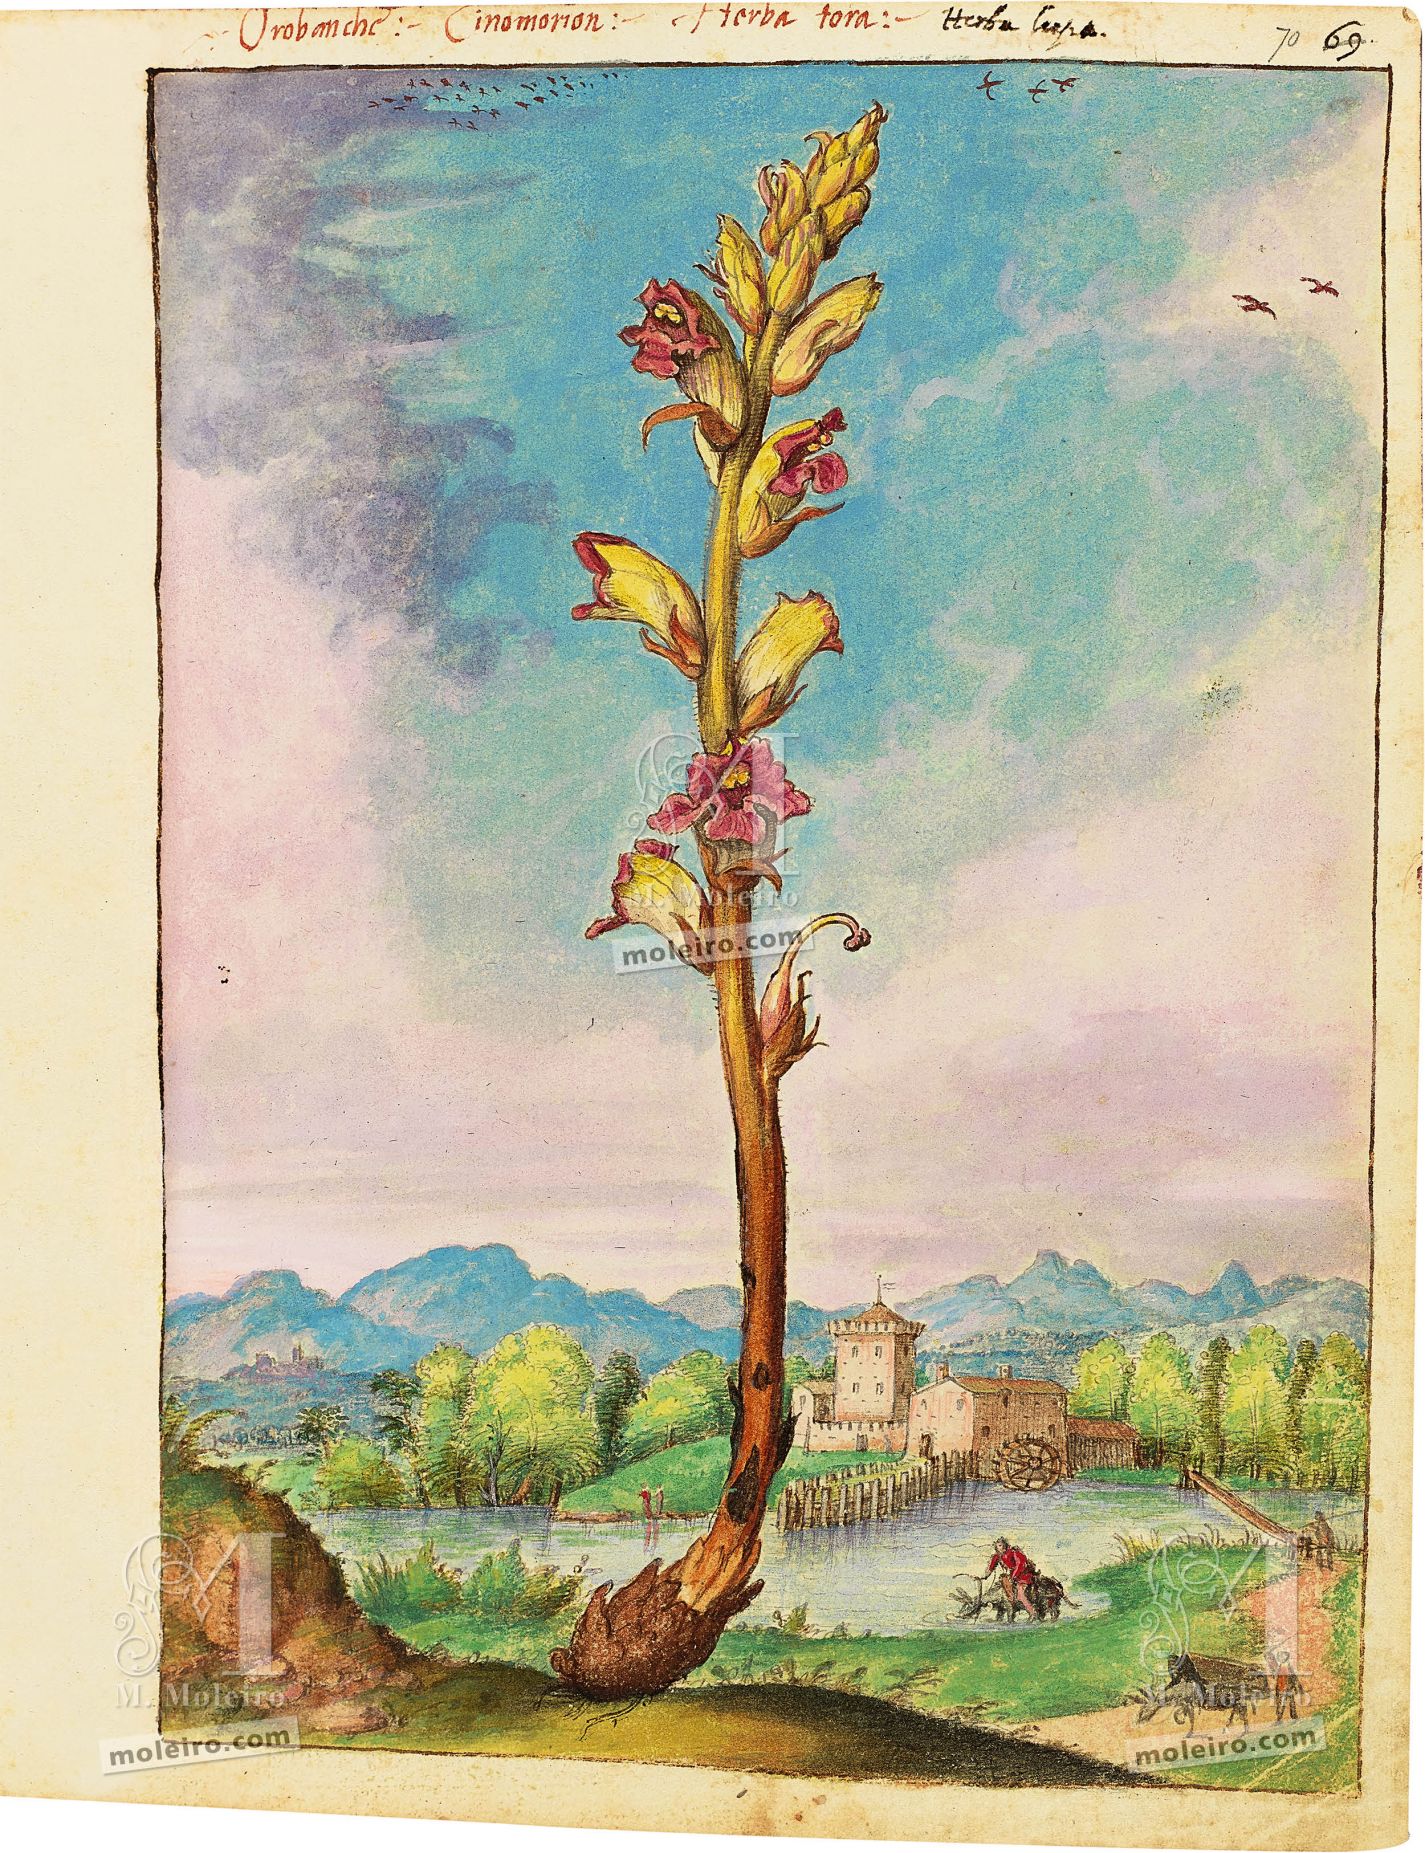 Hierba tora (Orobanche alba), ff. 69v-70r